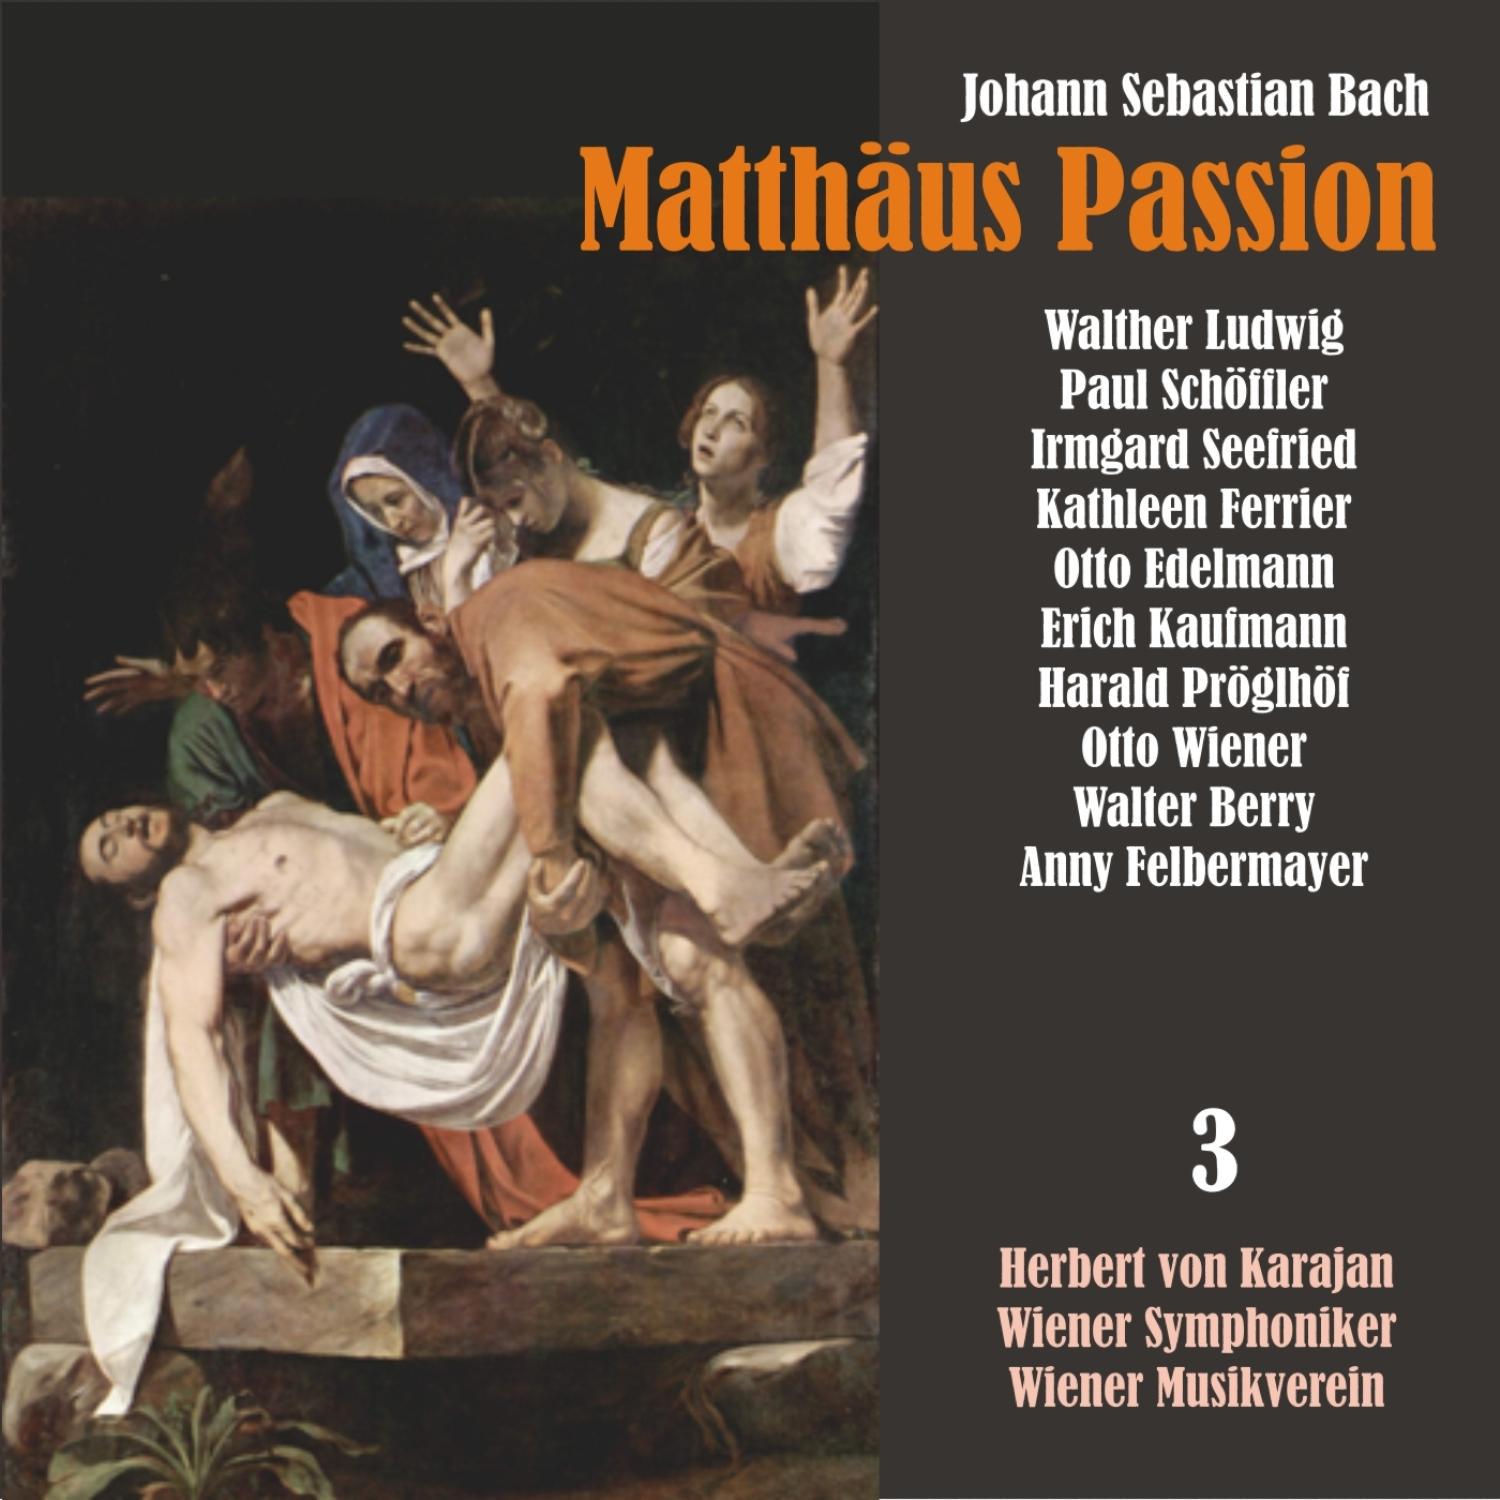 Matthäus Passion, BWV 244: "Konnen Tranen meiner Wangen"